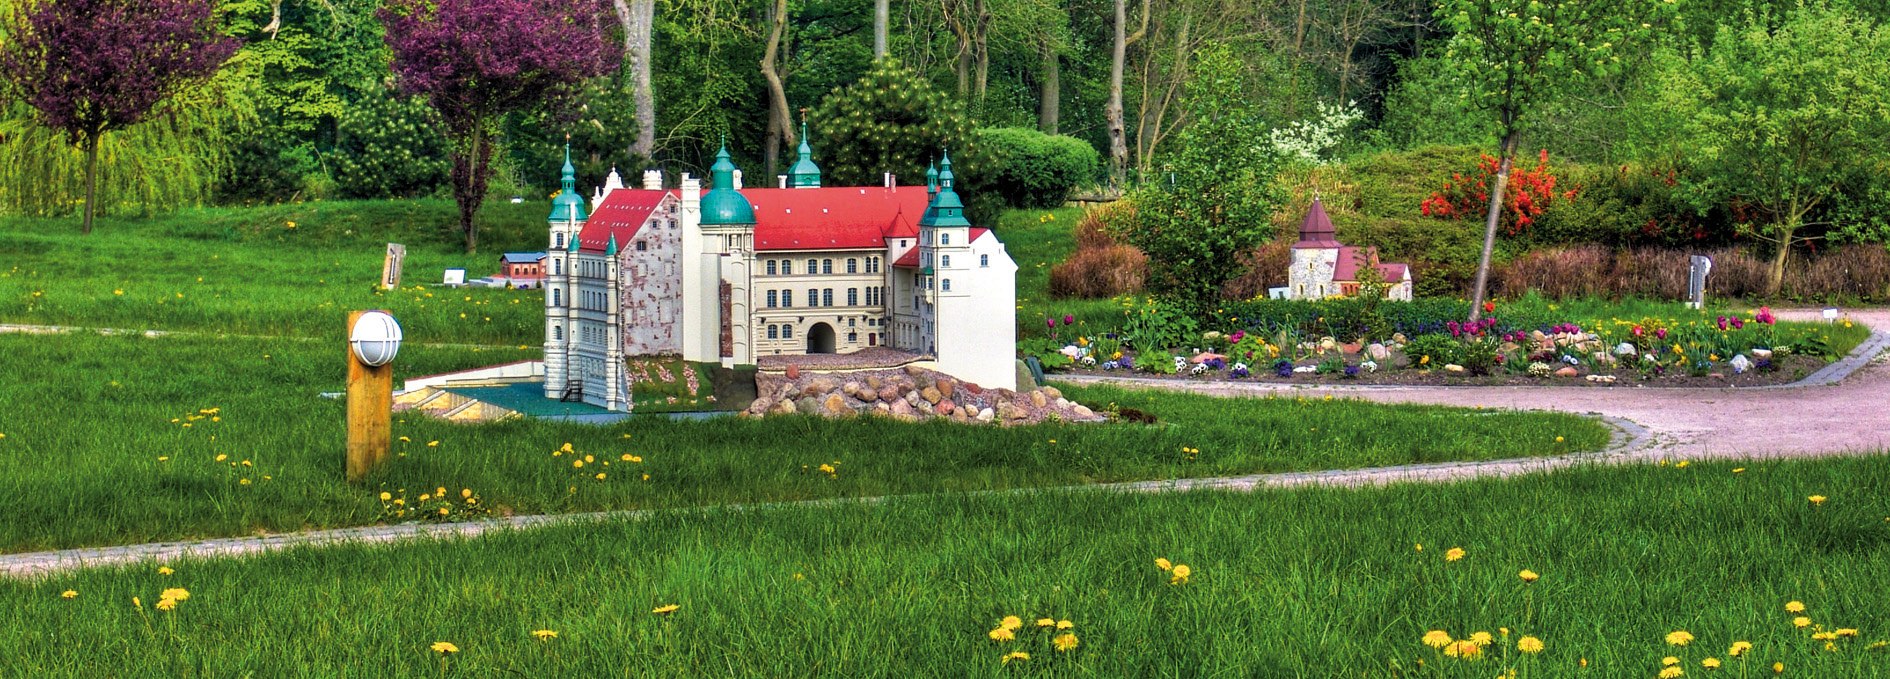 Frühlingshaftes Schloss Güstrow (Modell), © gemeinnützige AFW GmbH/miniland MV